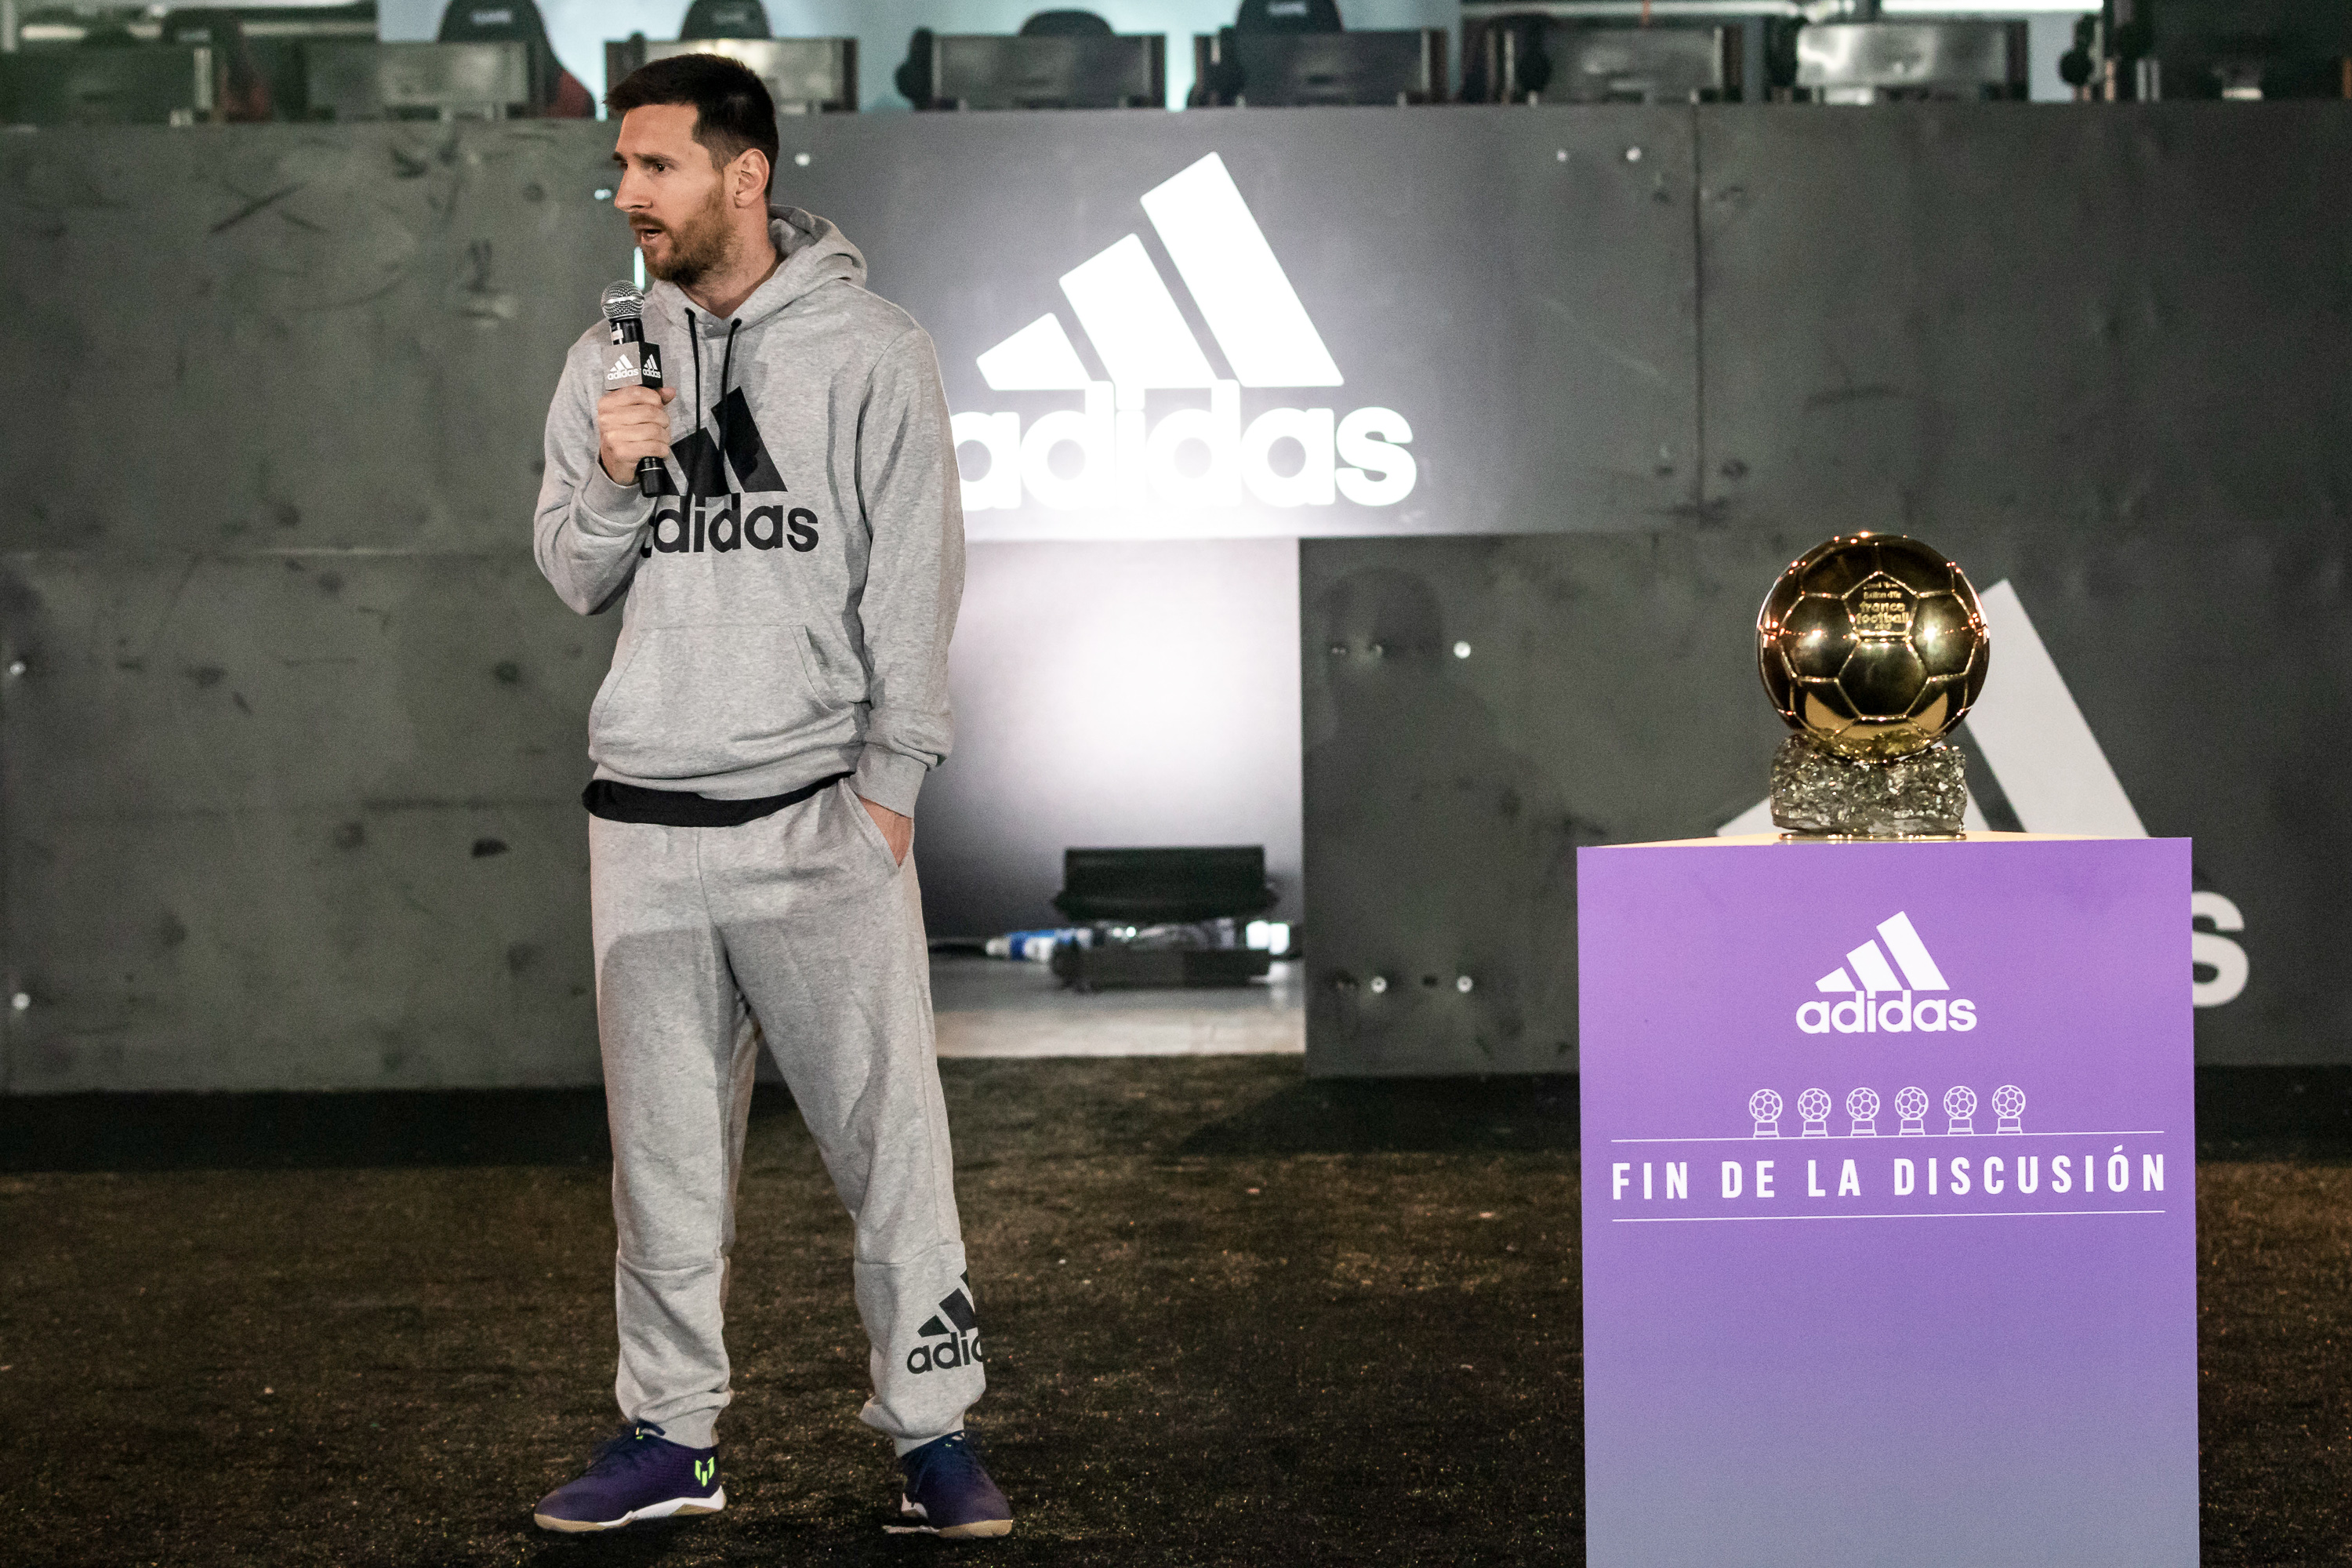 Lionel Messi Adidas sports sponsorship